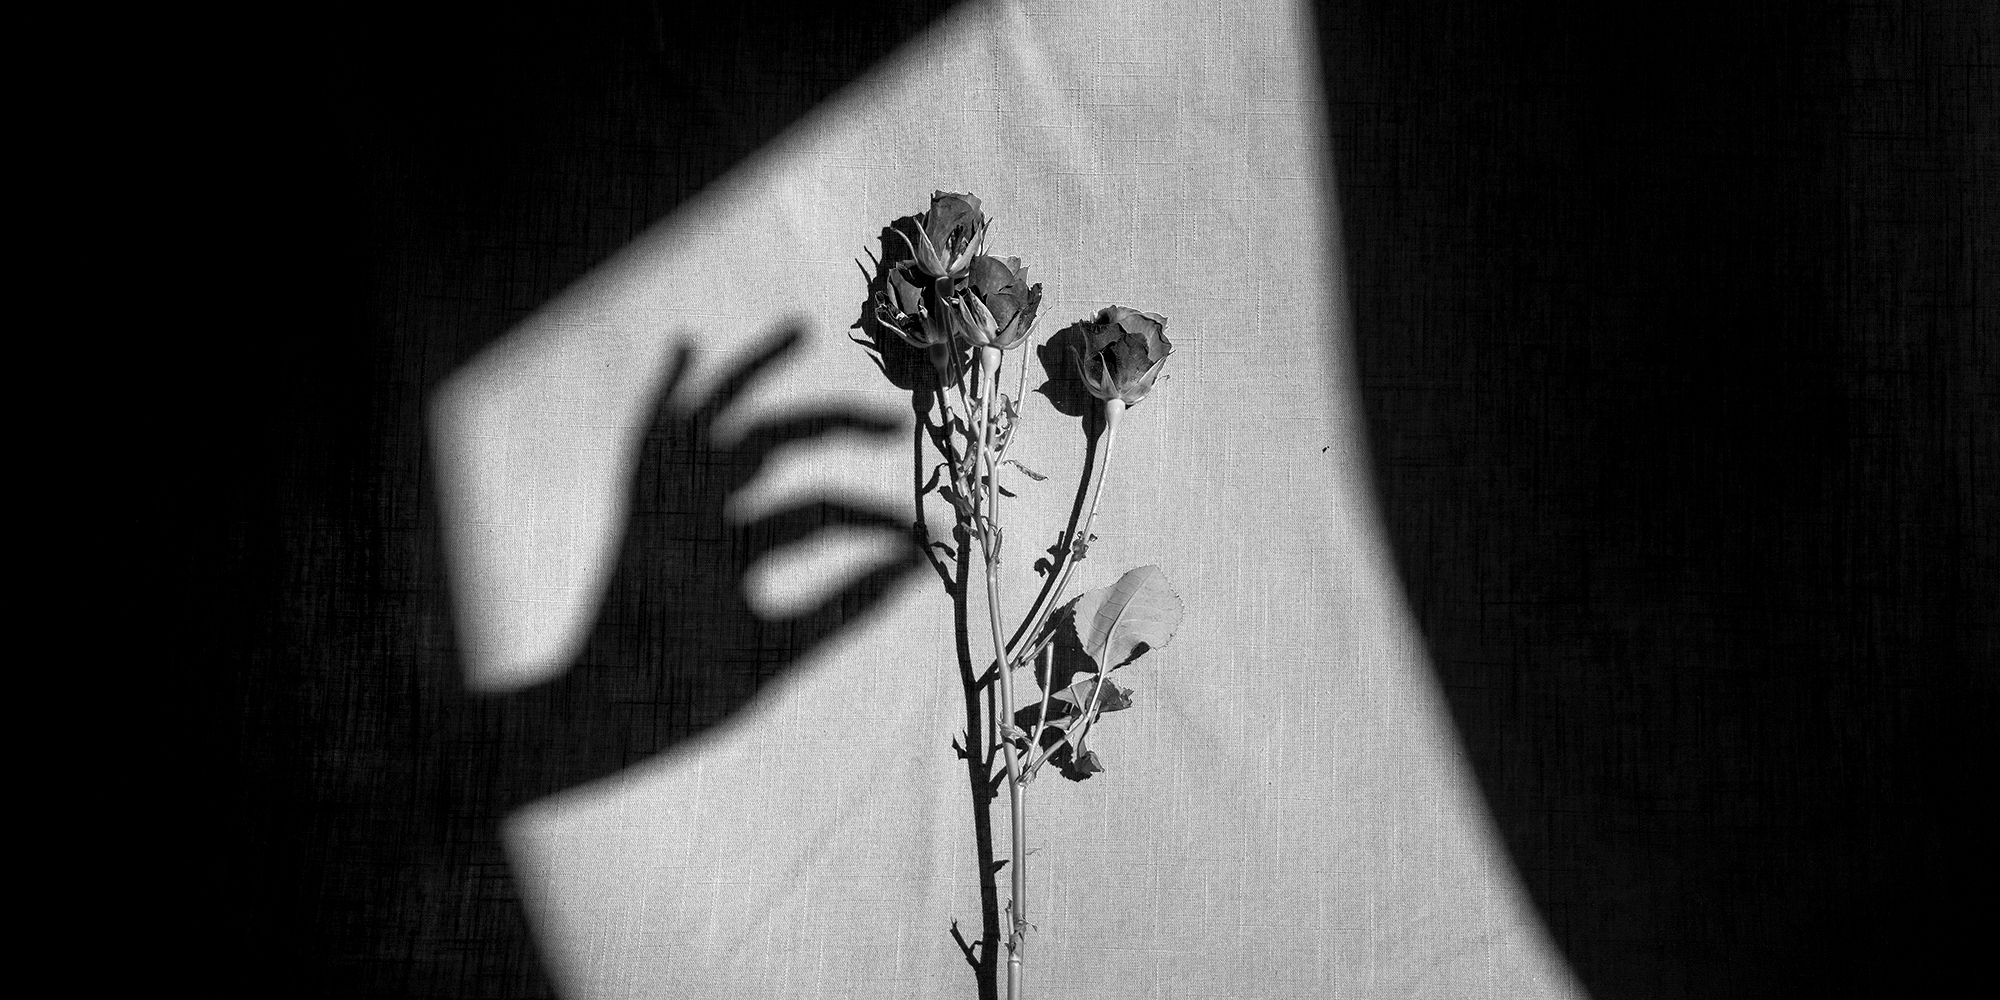 Shadow hand picking flower